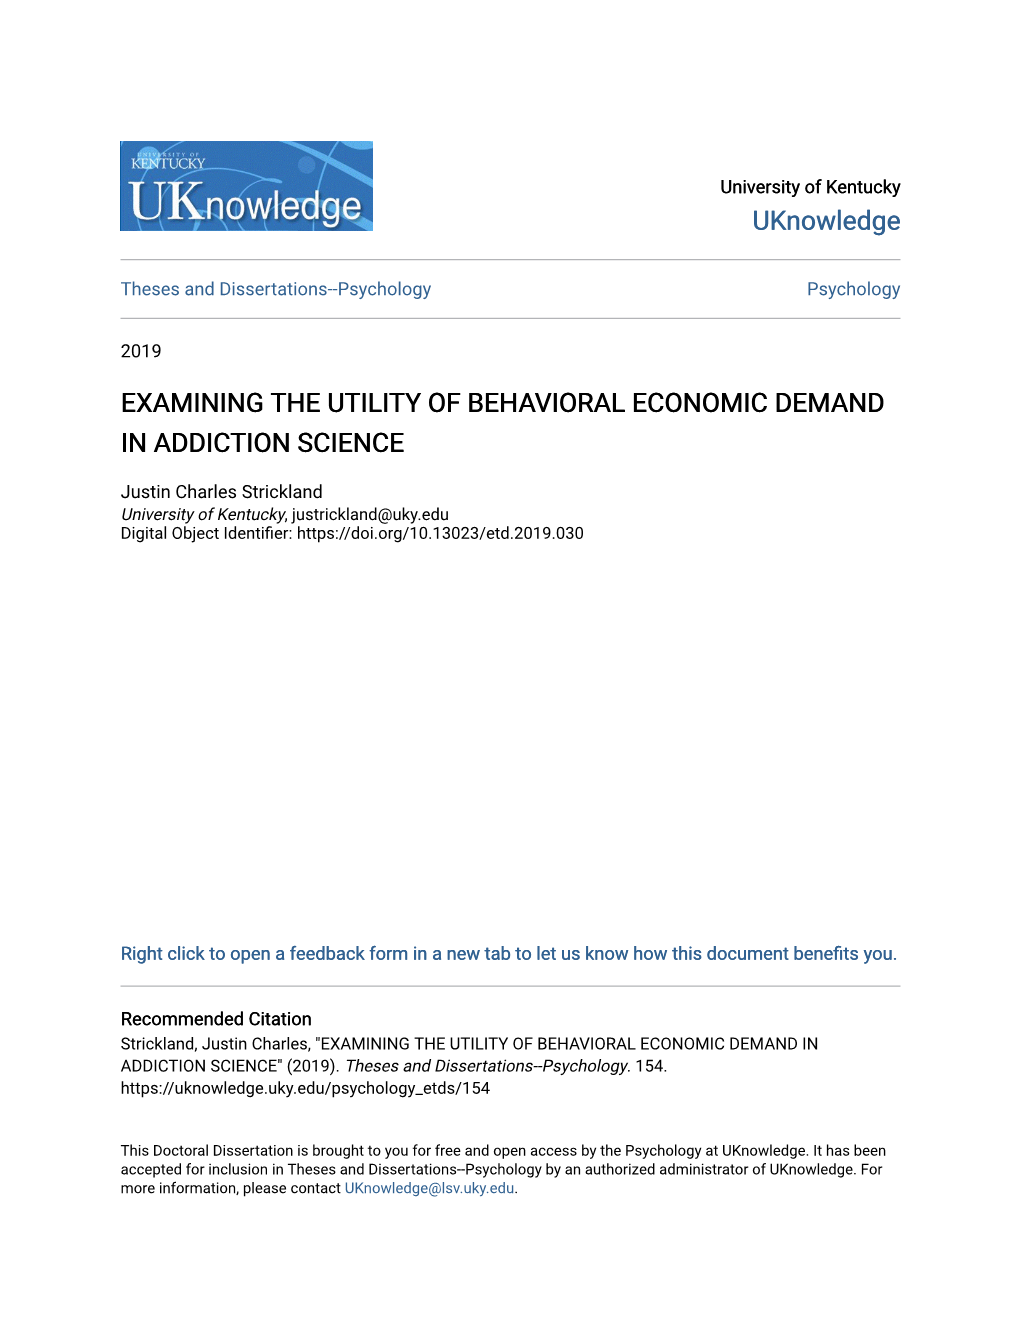 Examining the Utility of Behavioral Economic Demand in Addiction Science